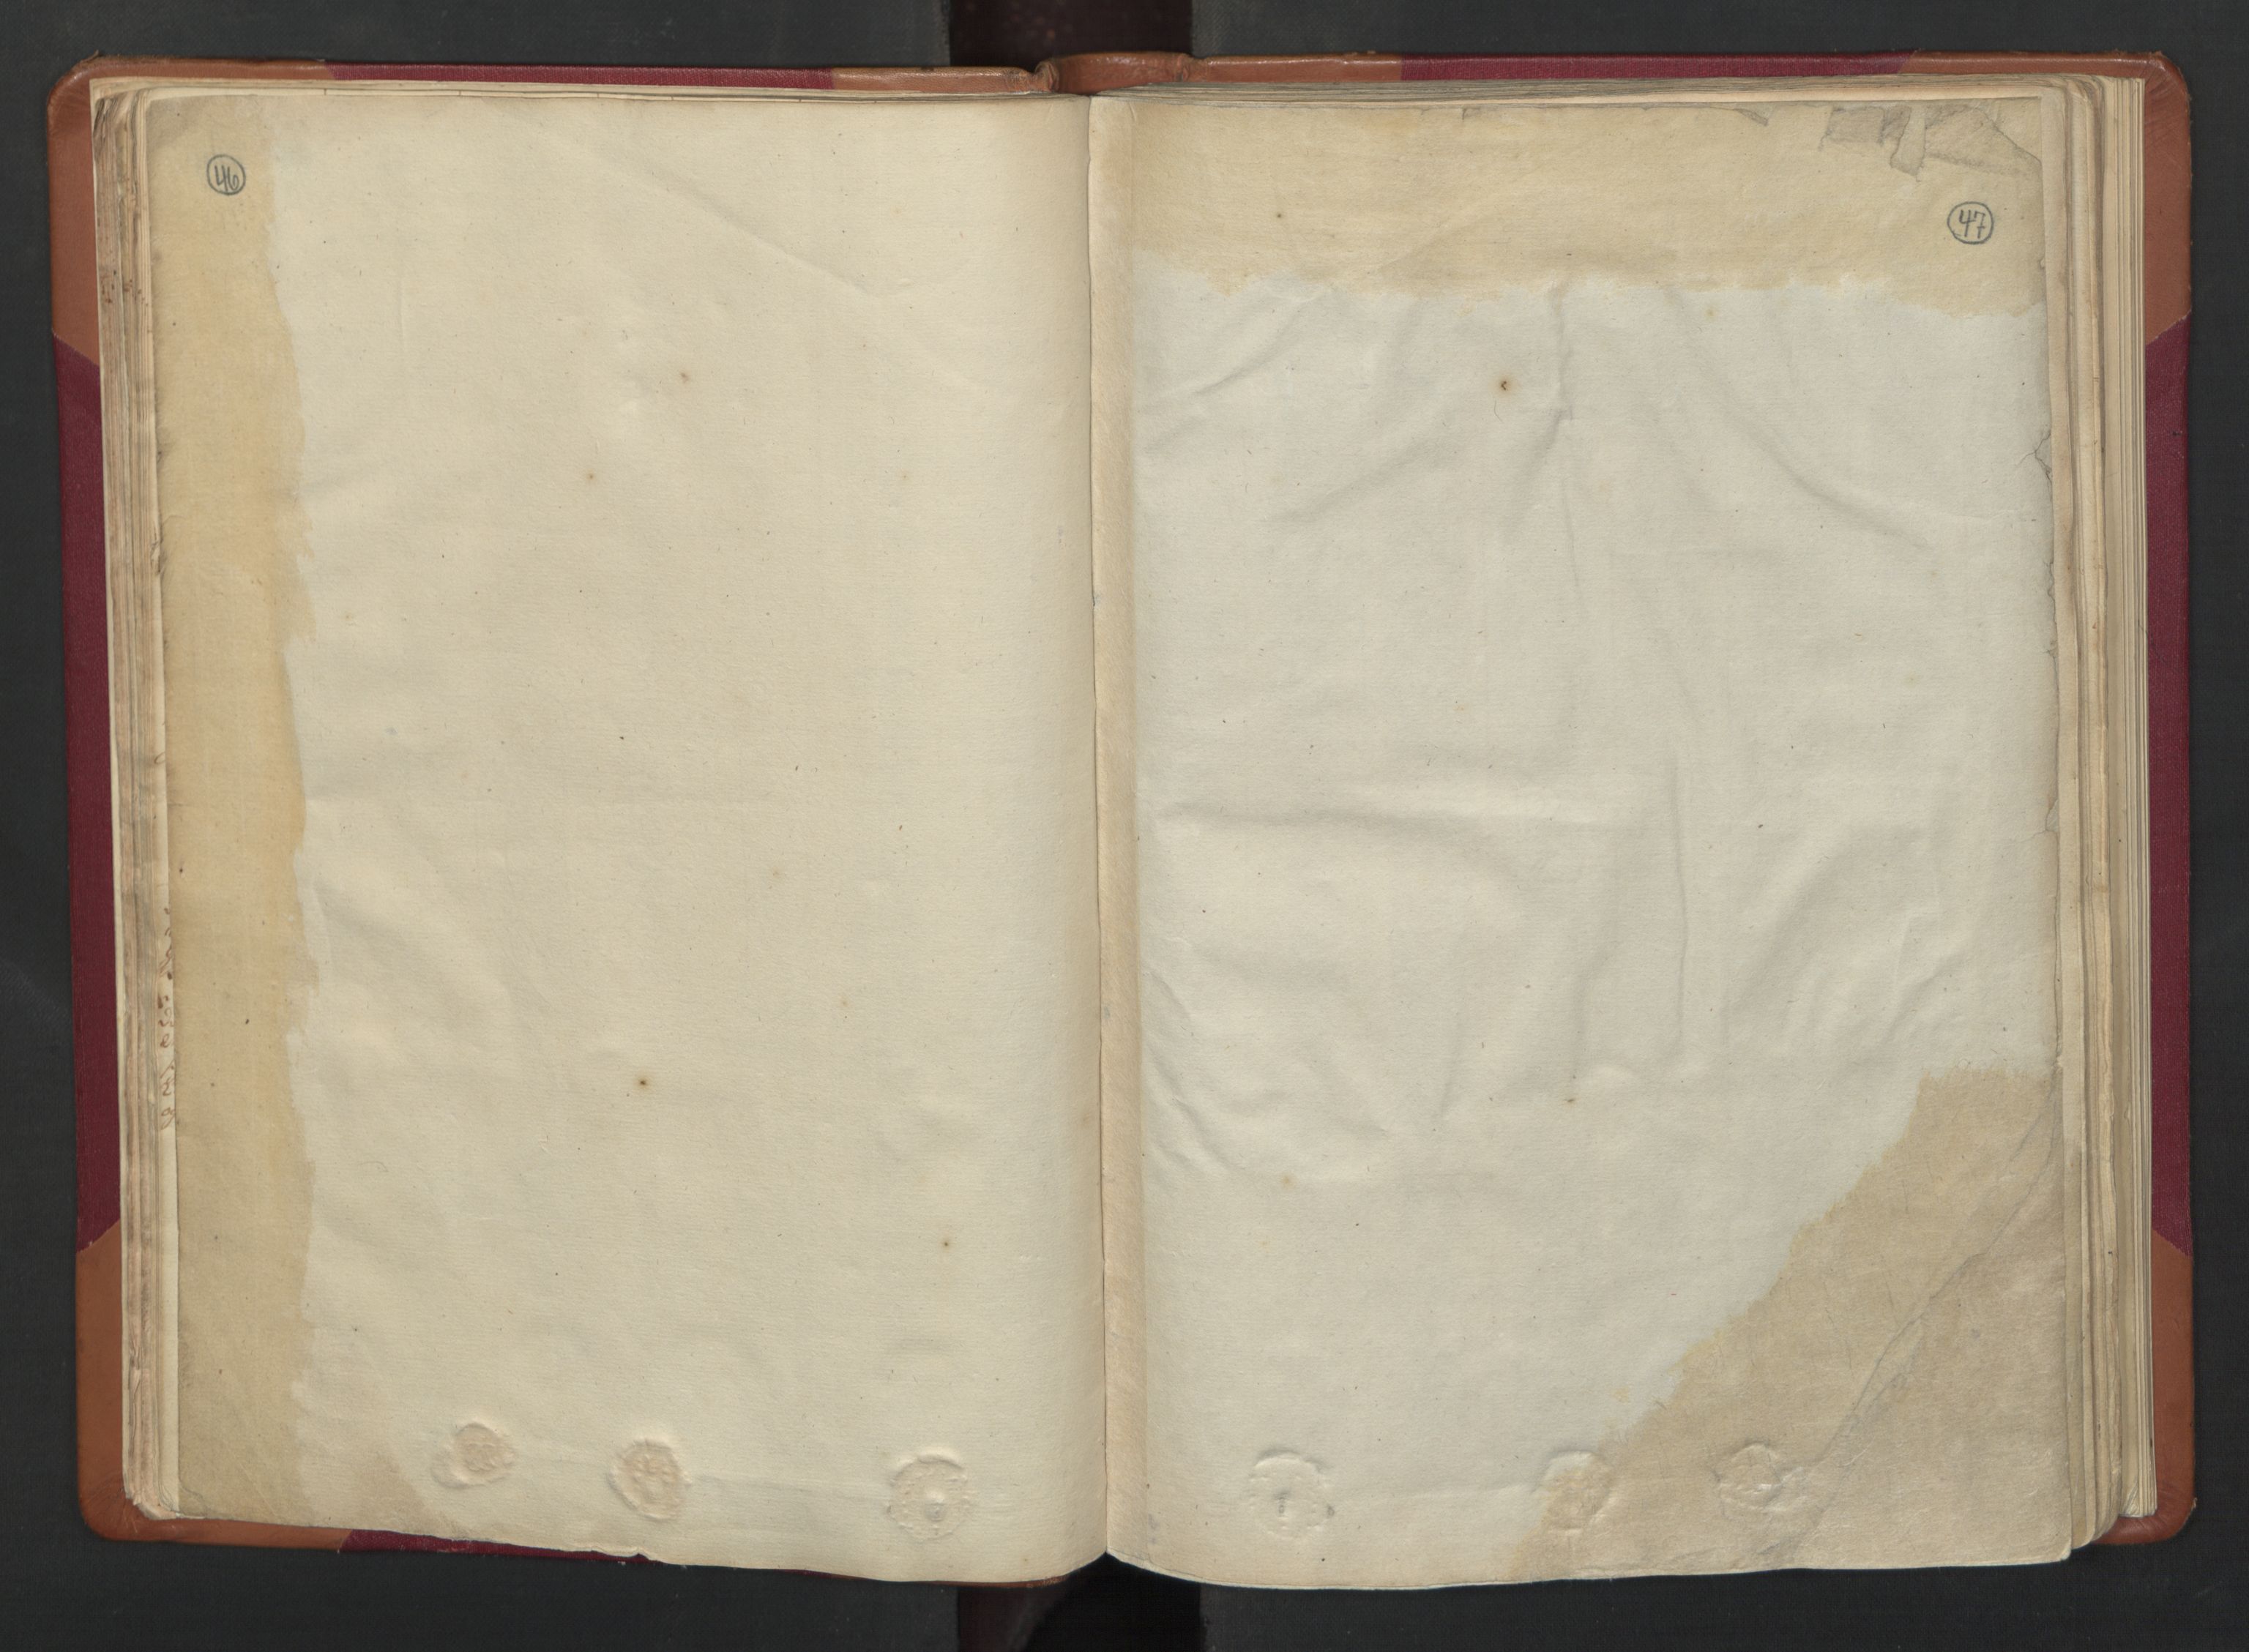 RA, Manntallet 1701, nr. 17: Salten fogderi, 1701, s. 46-47